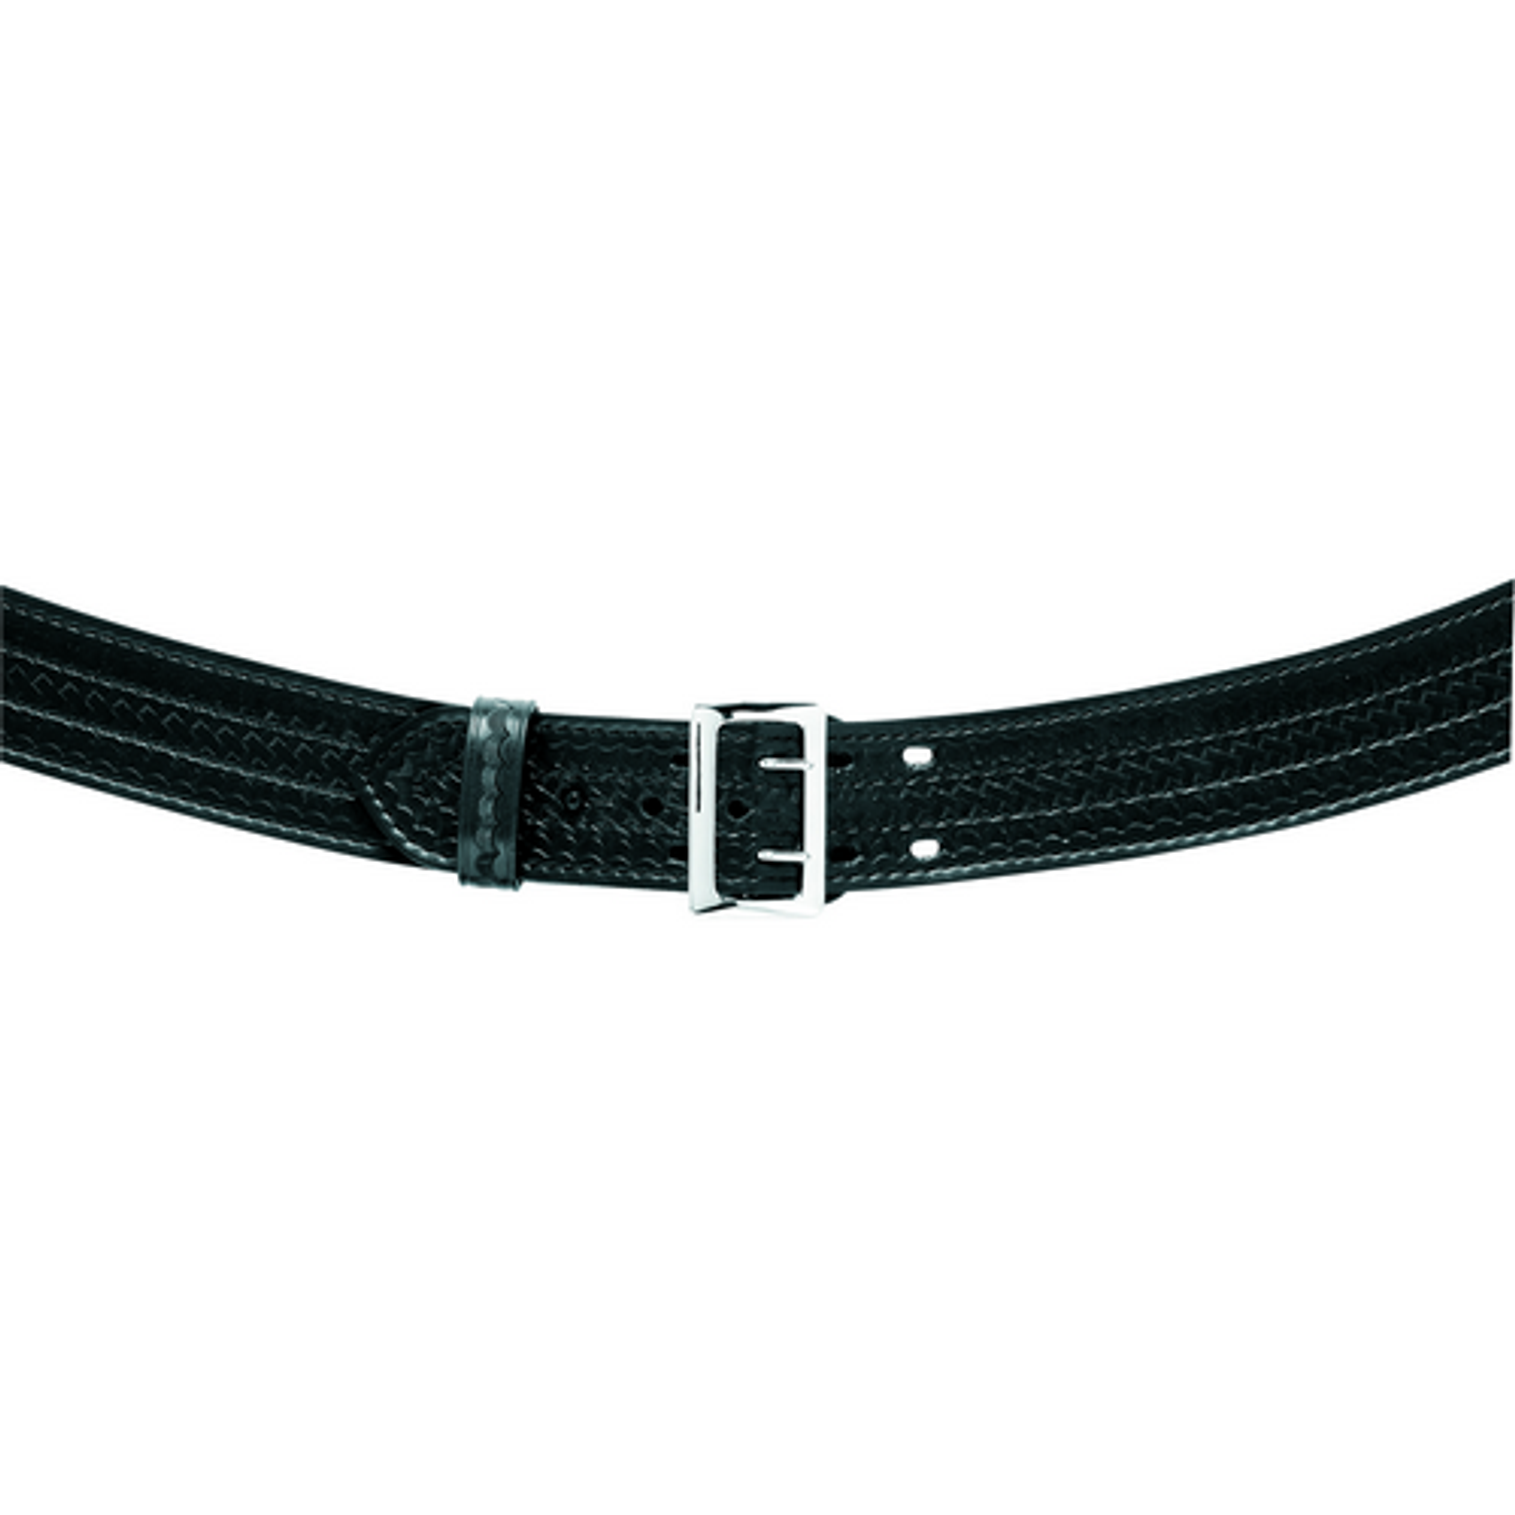 872 - Contoured Duty Belt, Suede Lined, 2.25 (58mm) - KR872-40-6B